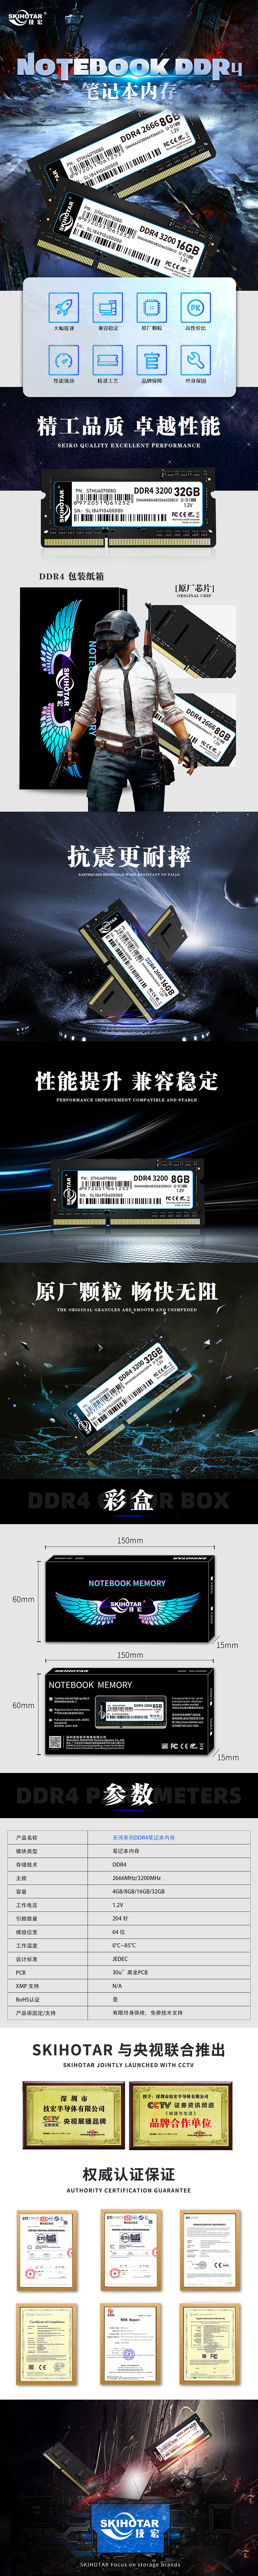 DDR4笔记本详情  中文52dpi.jpg